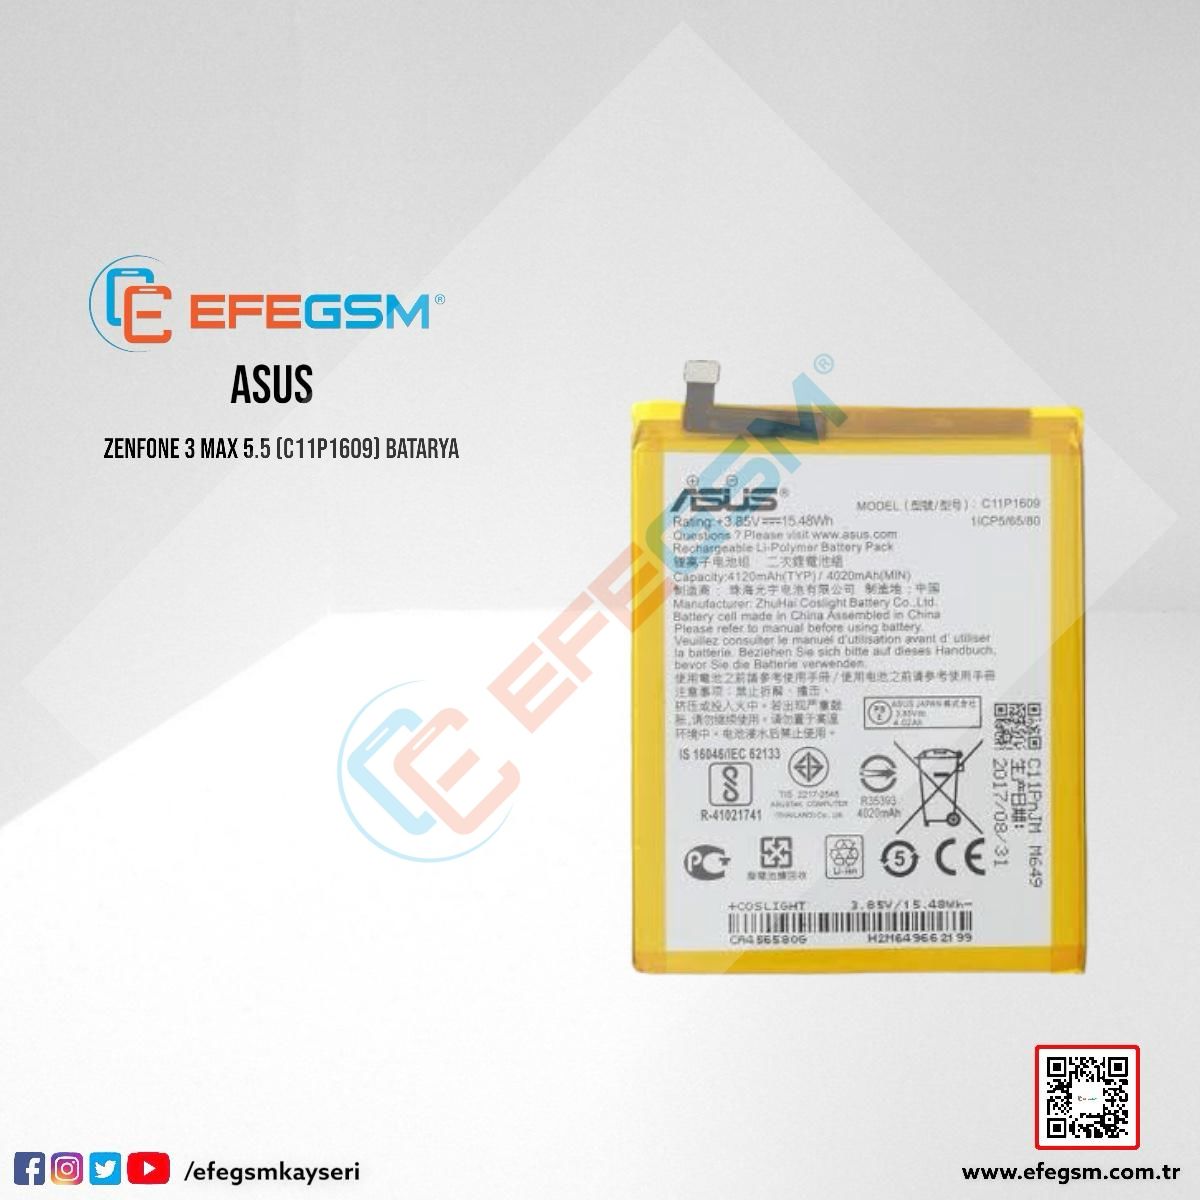 Asus Zenfone 3 Max 5.5 (C11P1609) Batarya